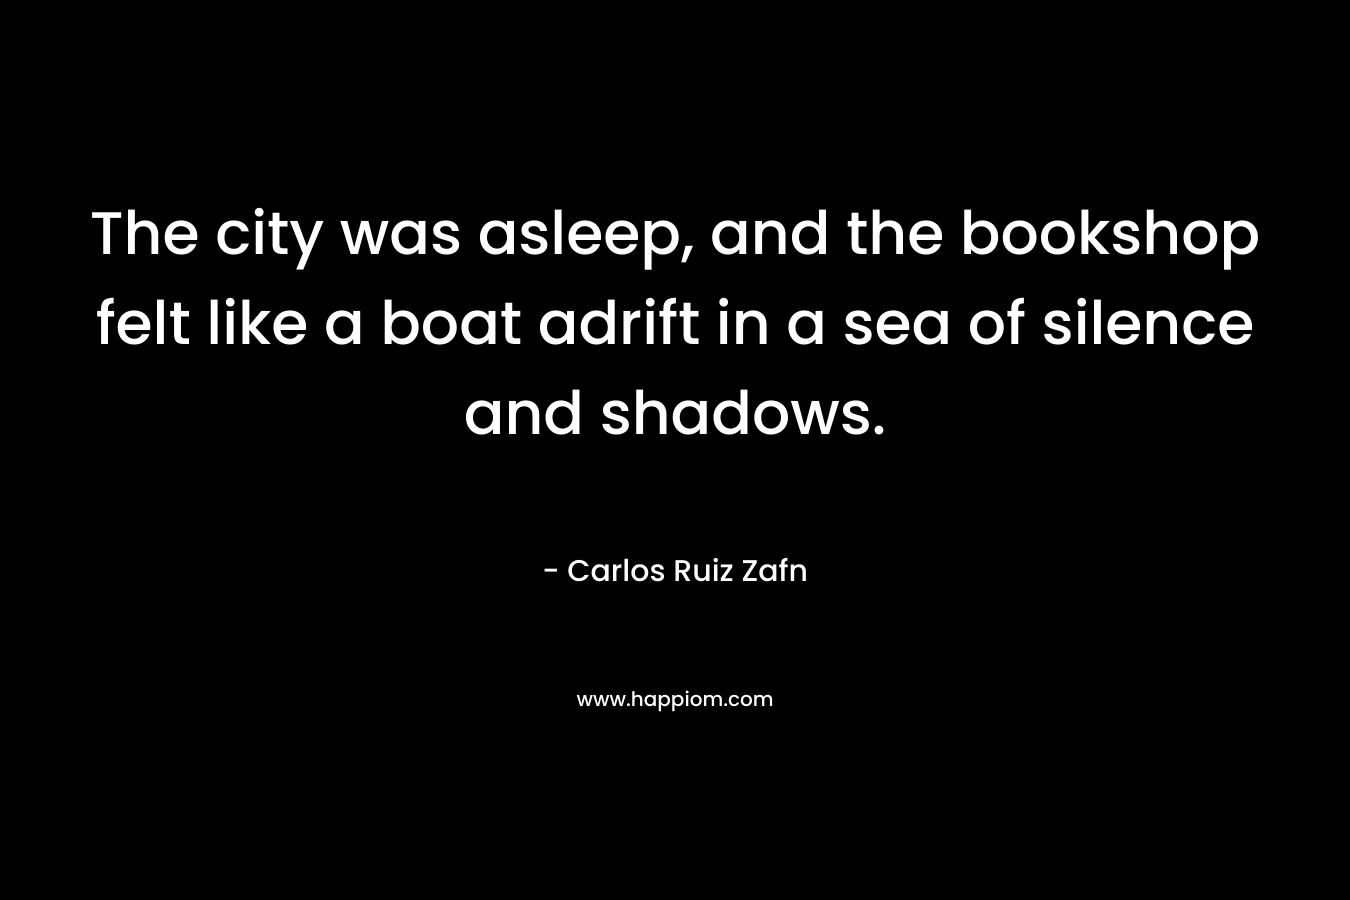 The city was asleep, and the bookshop felt like a boat adrift in a sea of silence and shadows. – Carlos Ruiz Zafn